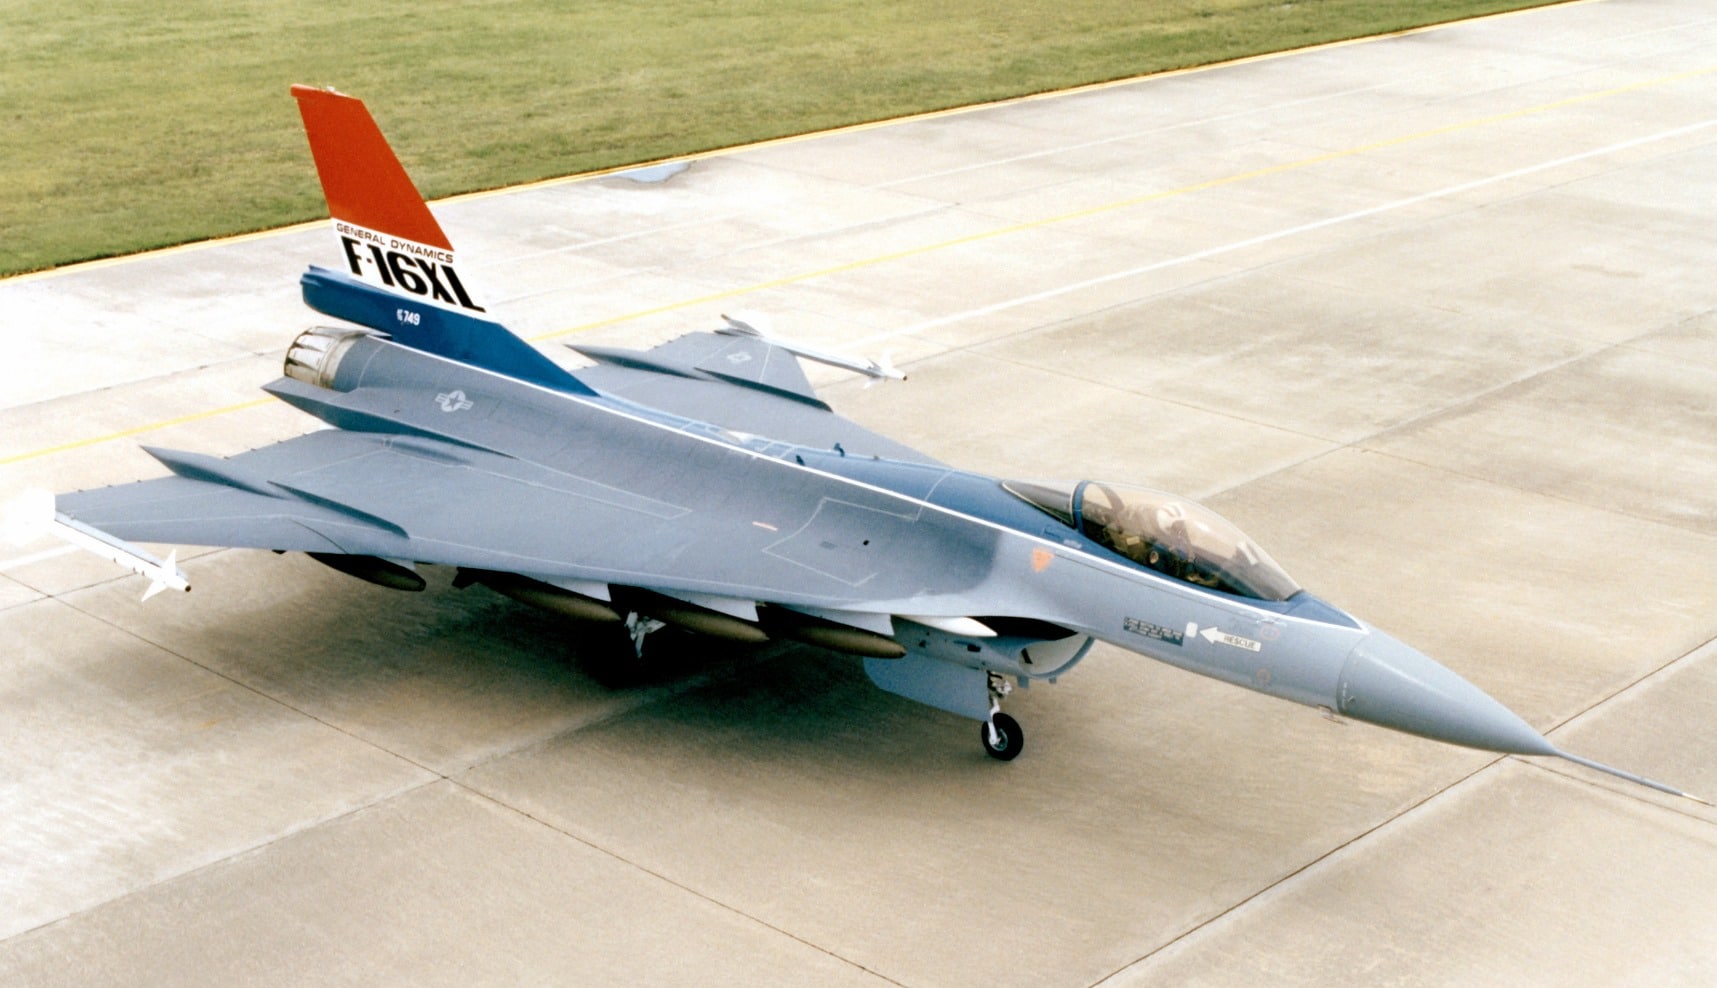 F-16XL on display.